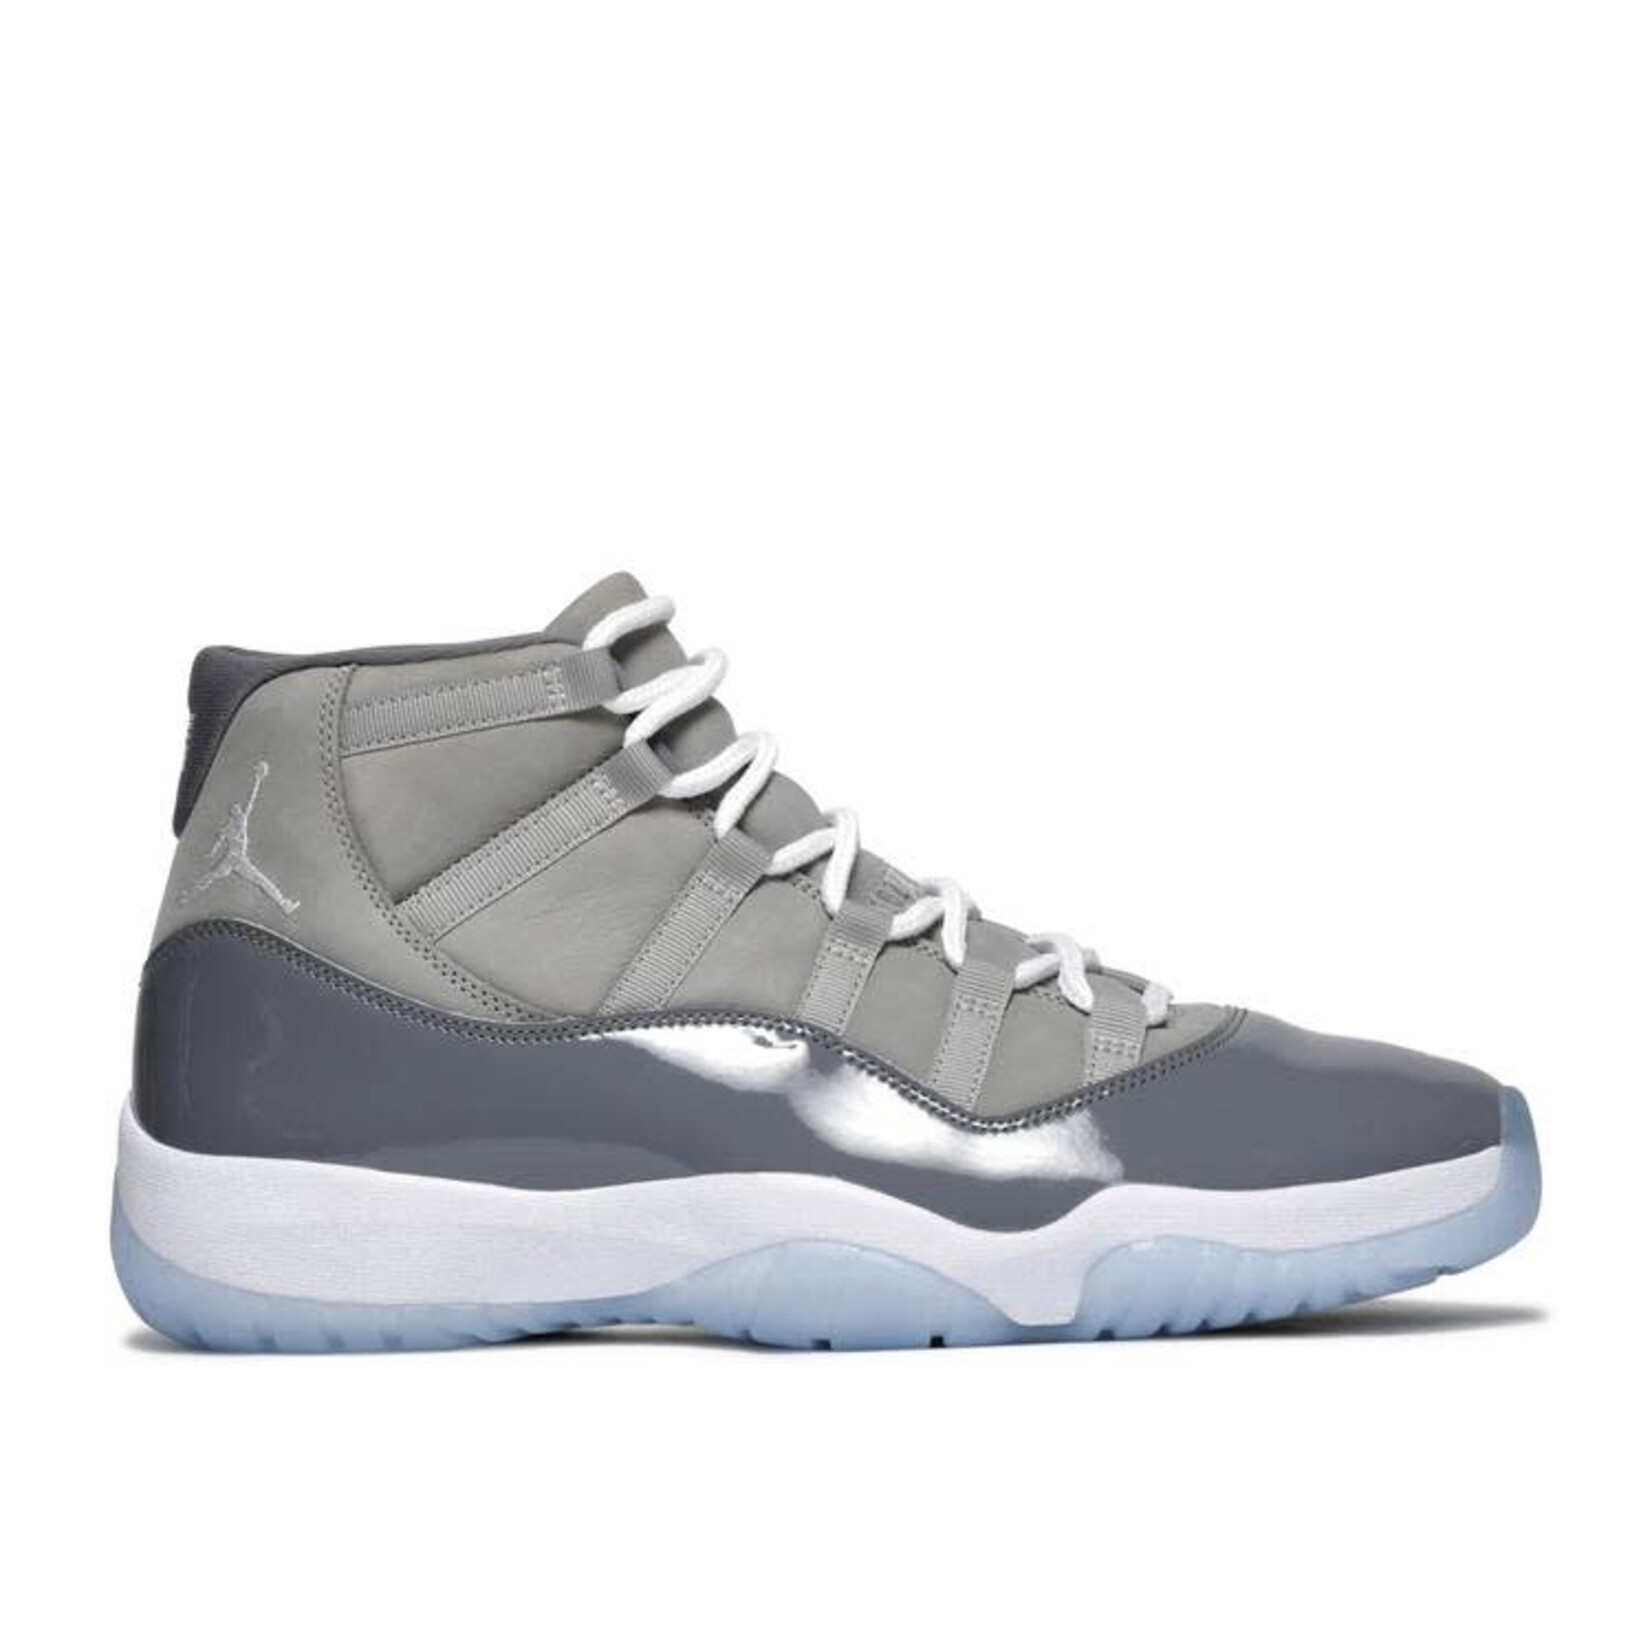 Jordan Jordan 11 Retro Cool Grey (2021) Size 9.5, DS BRAND NEW